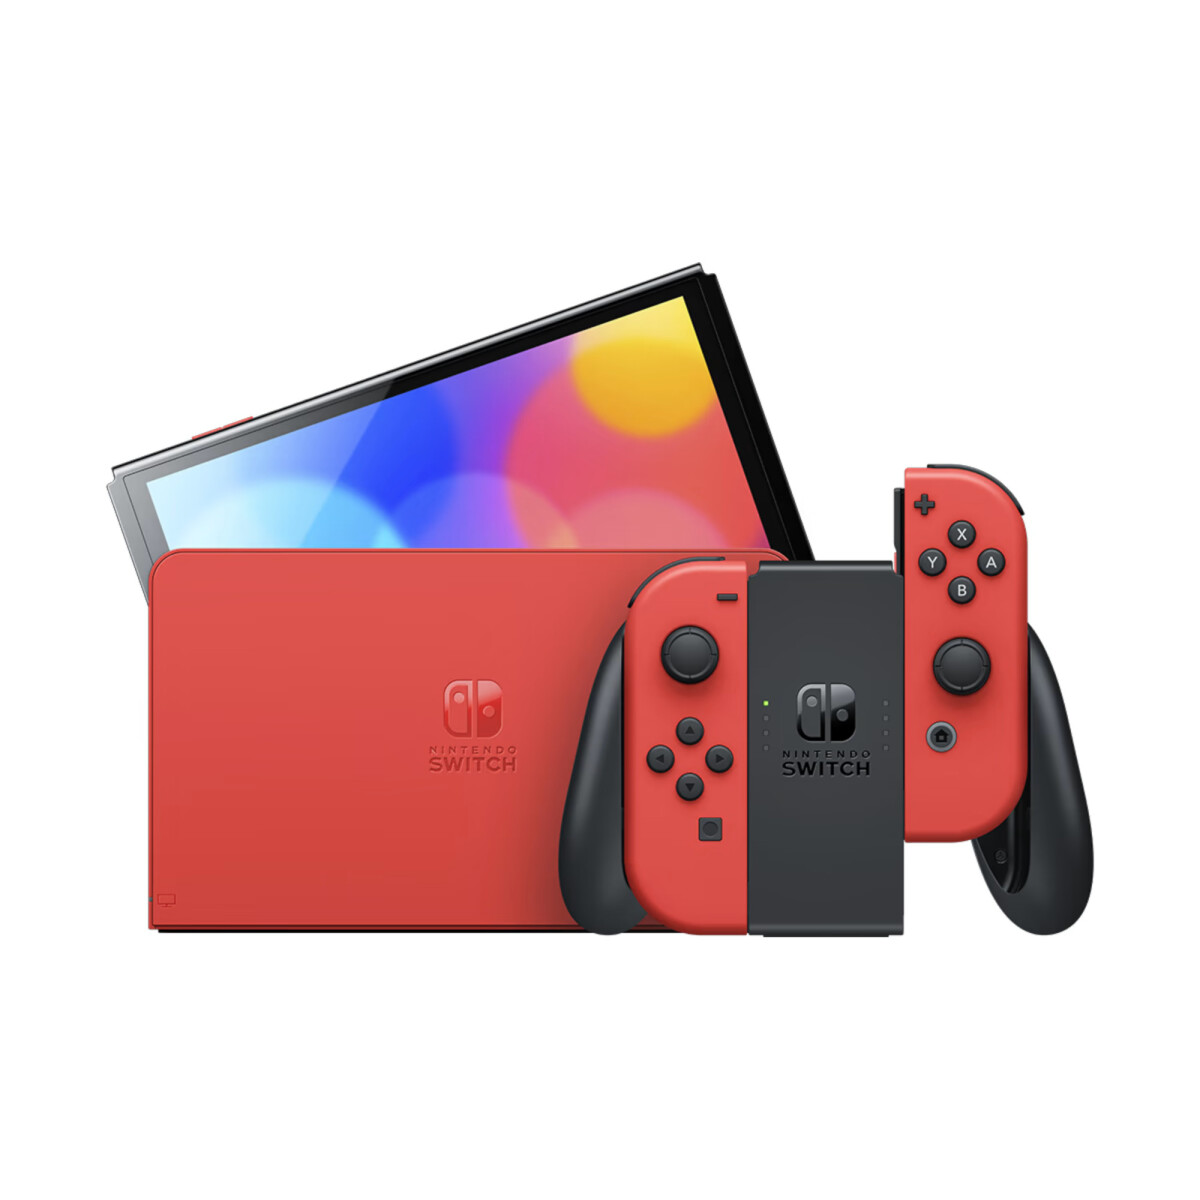 Nintendo - Consola Switch Oled Mario Red Edition - 7'' Oled. 64GB. Wifi. Bluetooth. LI-ION 4310MAH. - 001 